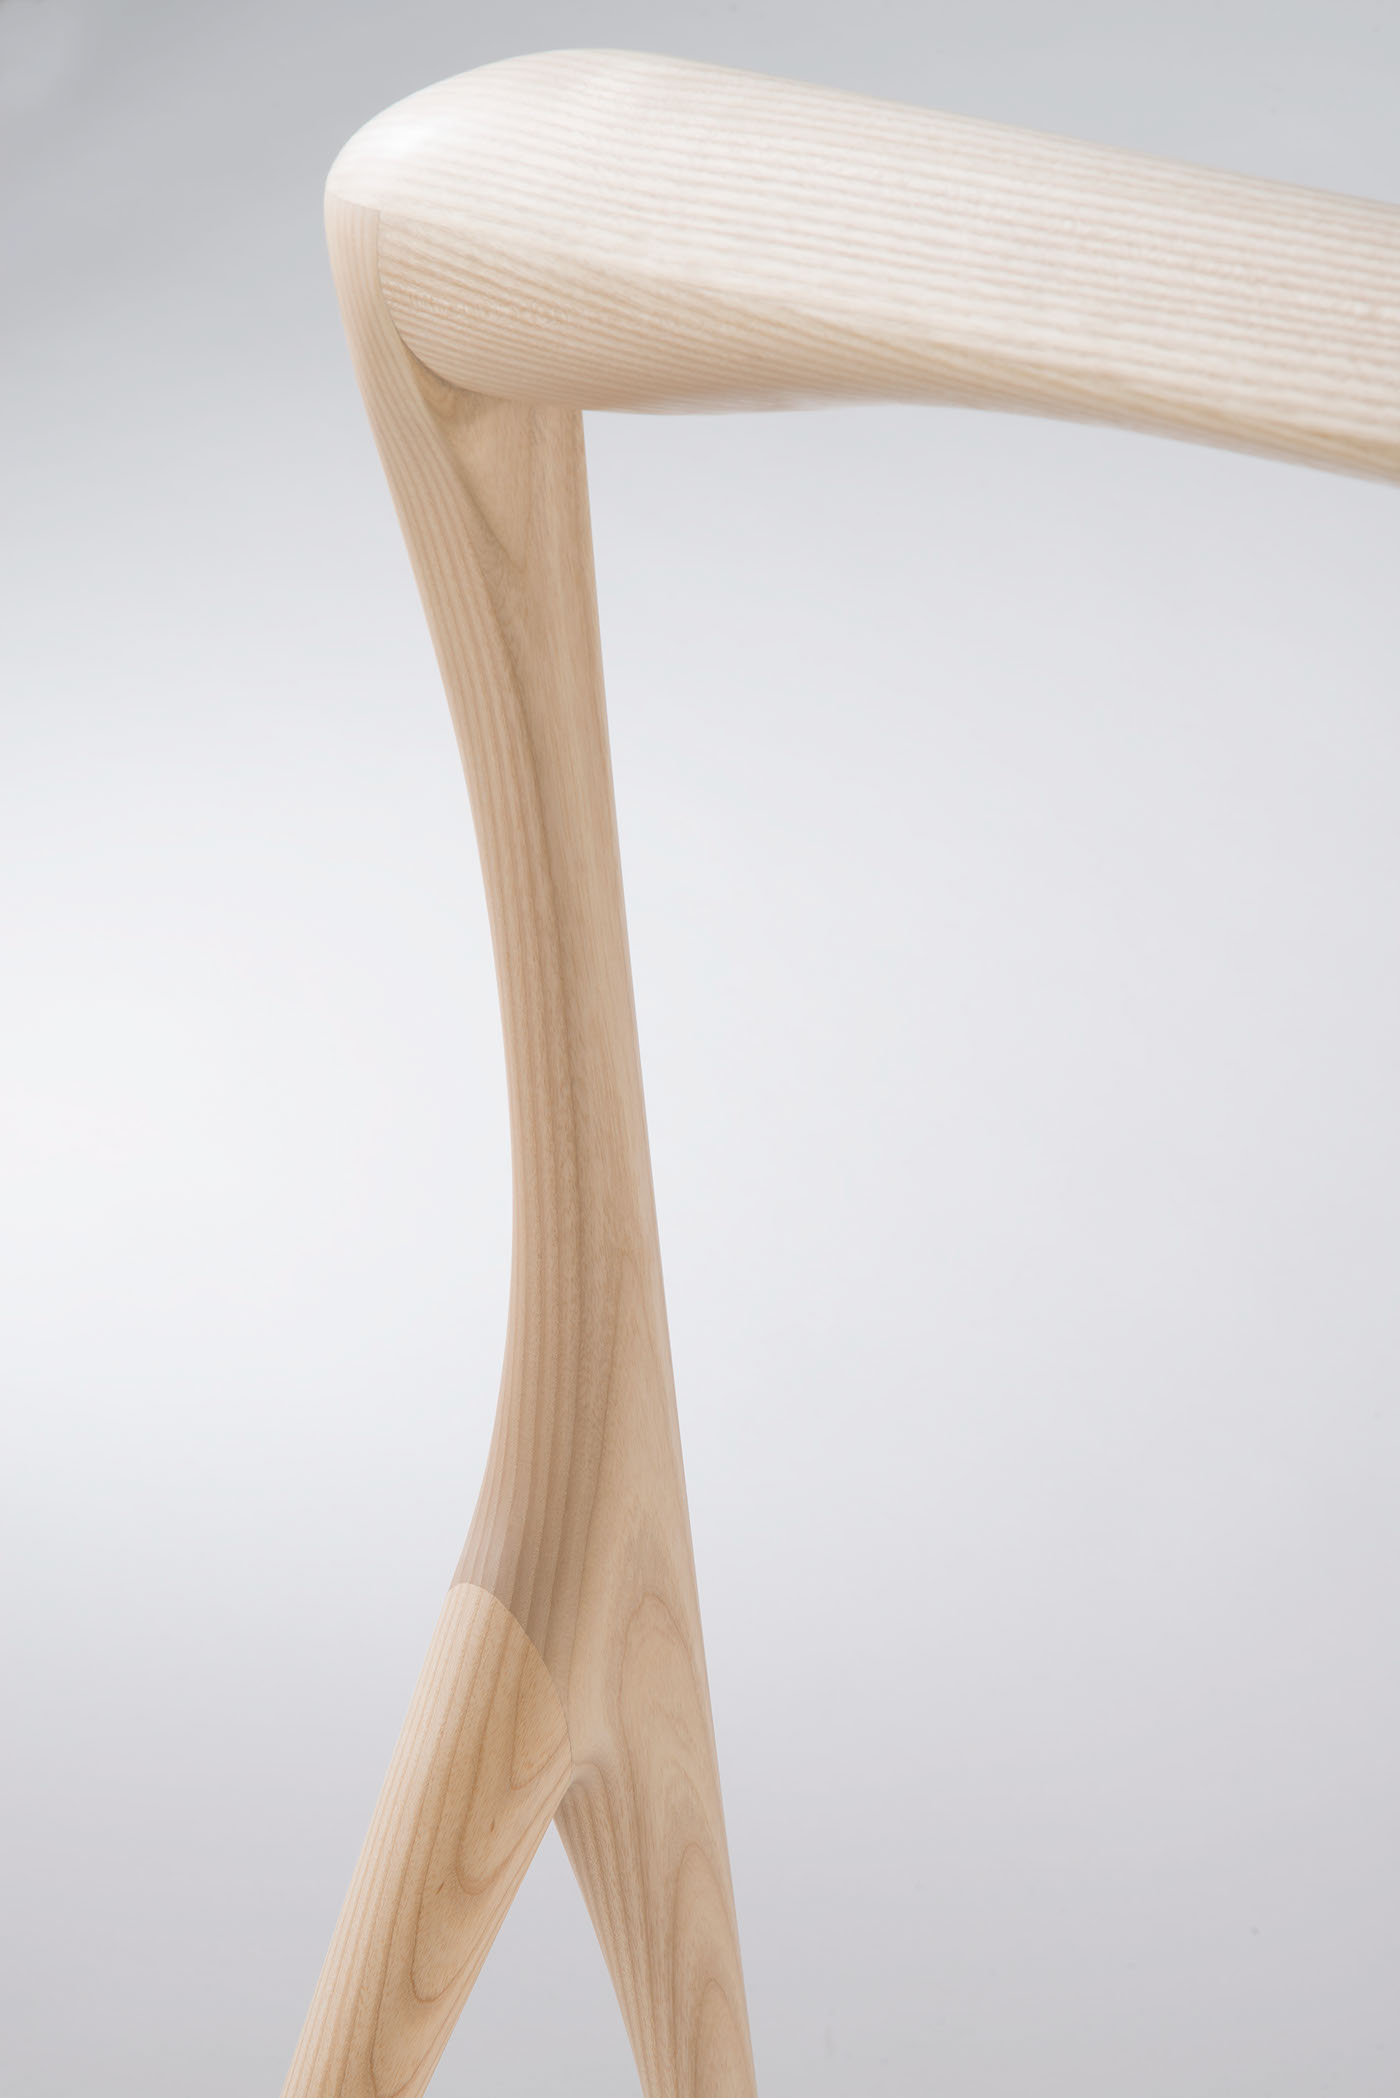 furniture design sculpture table ash wood risd dezeen design milk